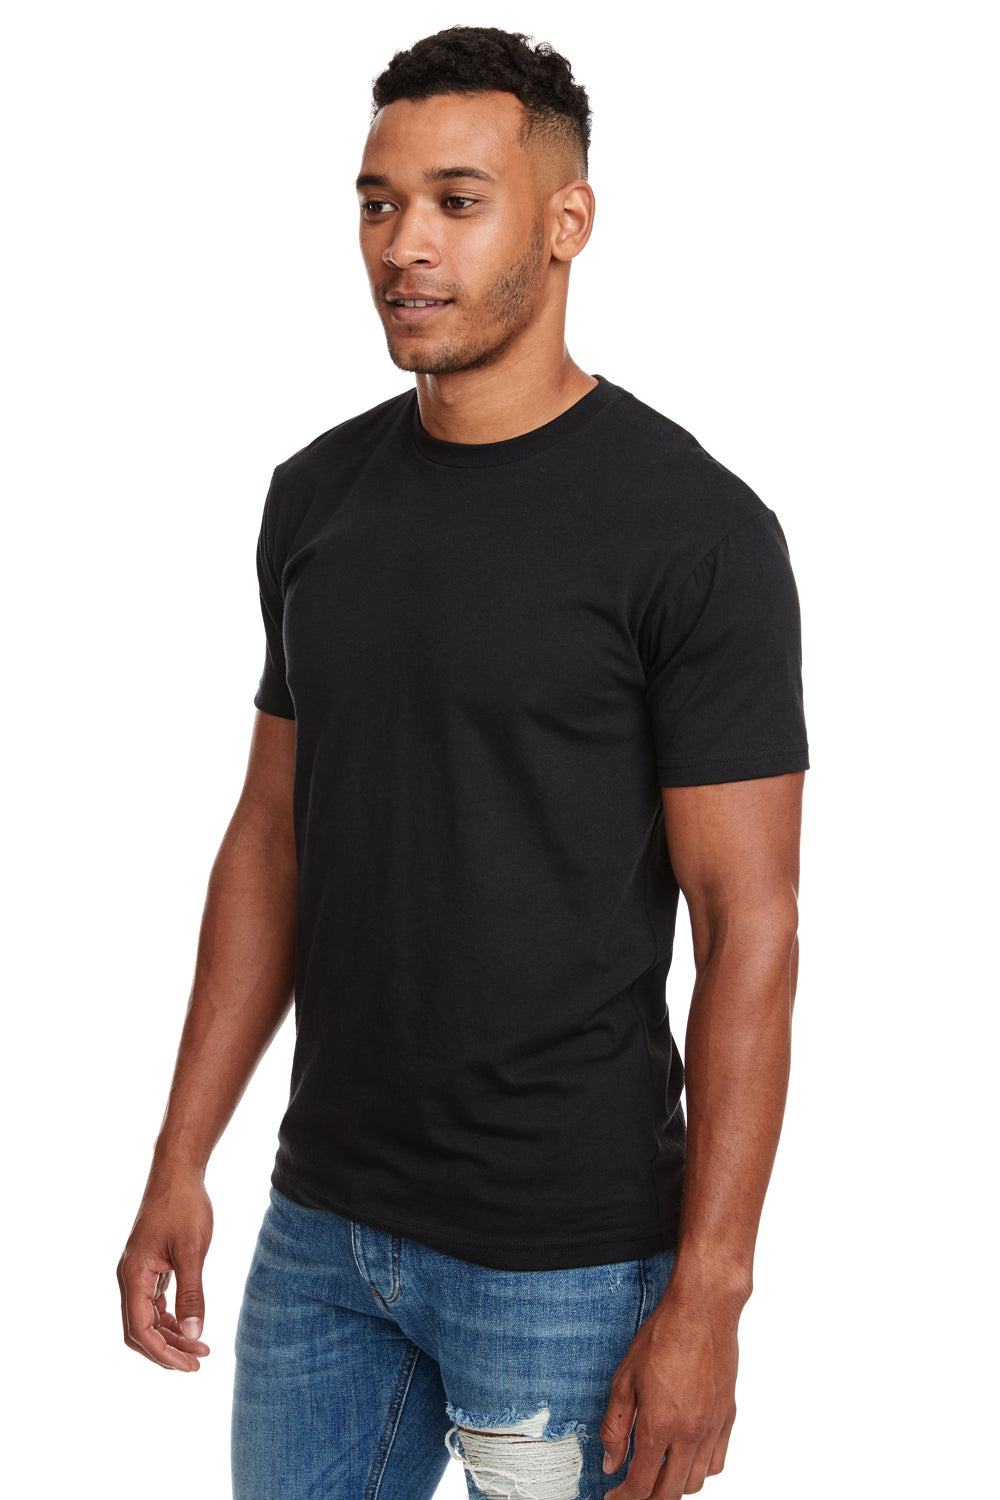 Next Level N6210 Mens CVC Jersey Short Sleeve Crewneck T-Shirt Black Side